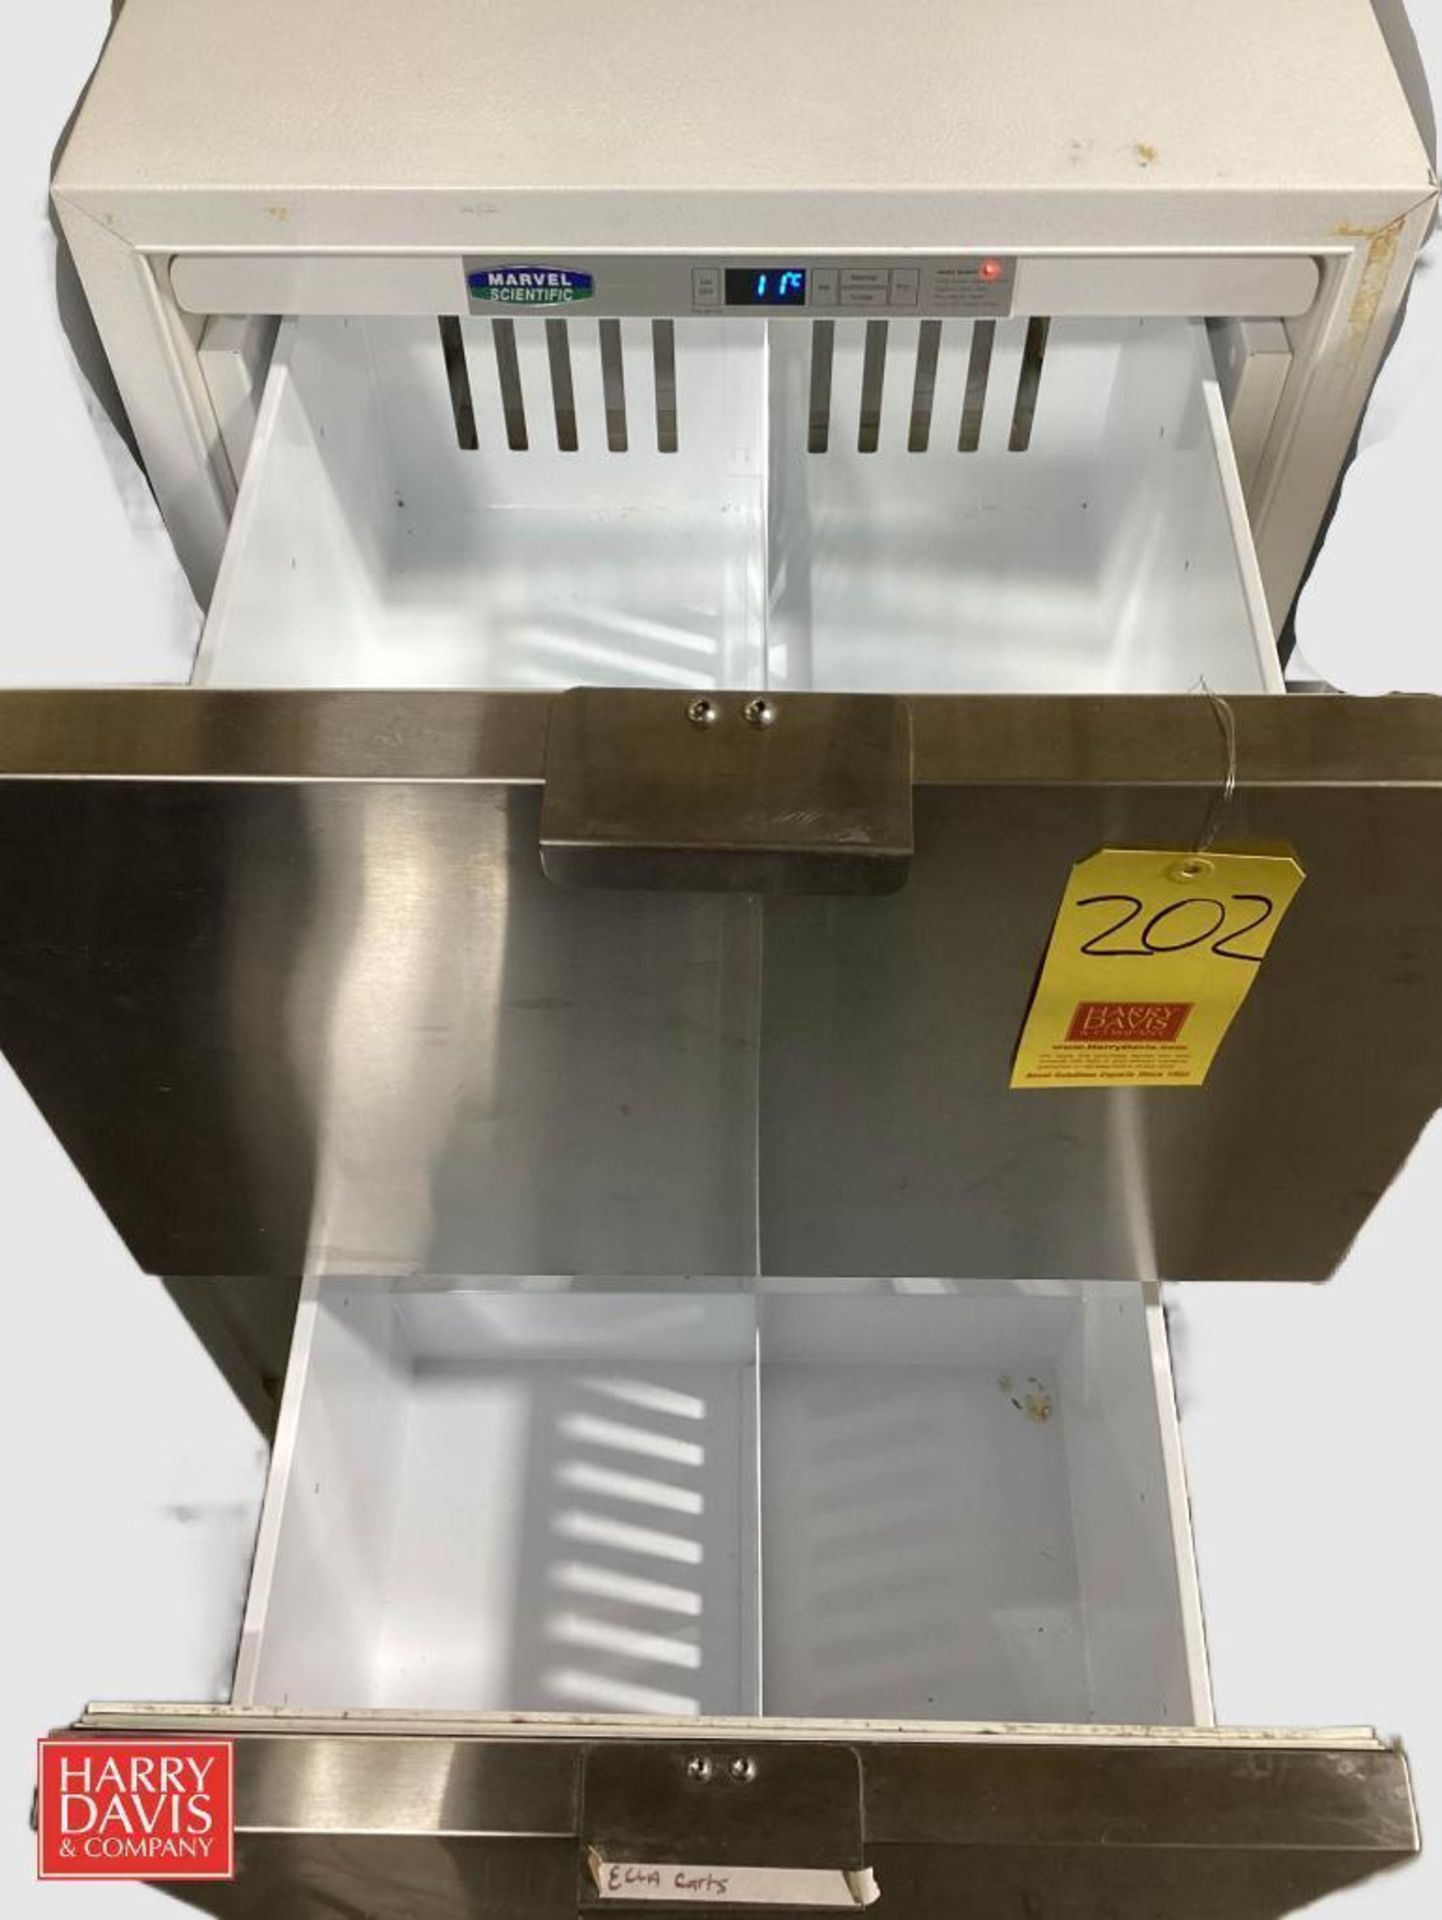 Marvel Scientific 6CRDE012 24" Undercounter Refrigerator/Freezer - Image 3 of 4